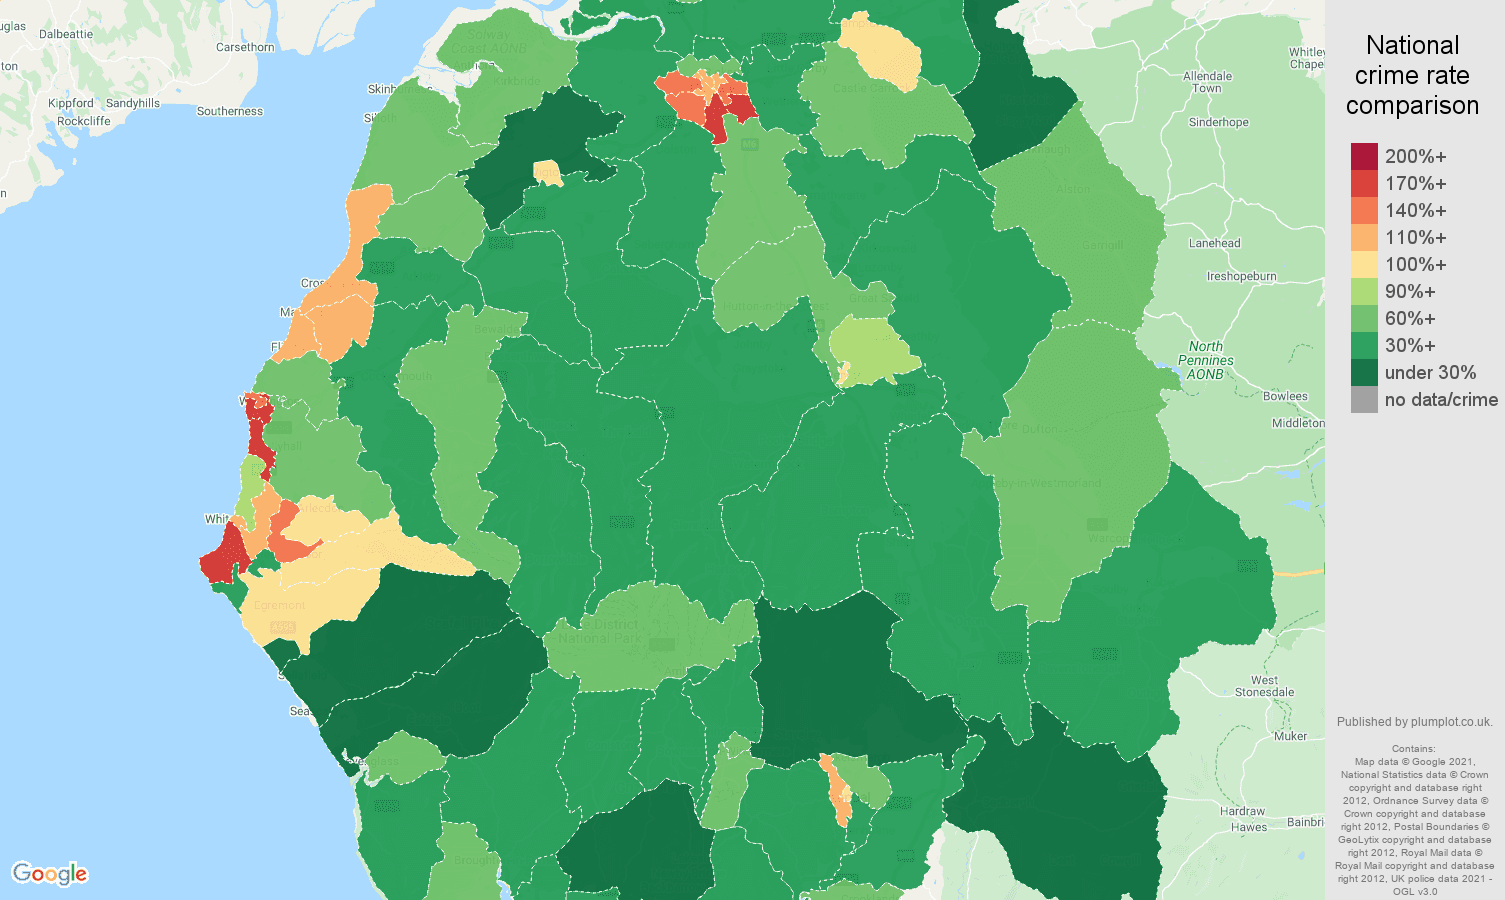 Cumbria violent crime rate comparison map